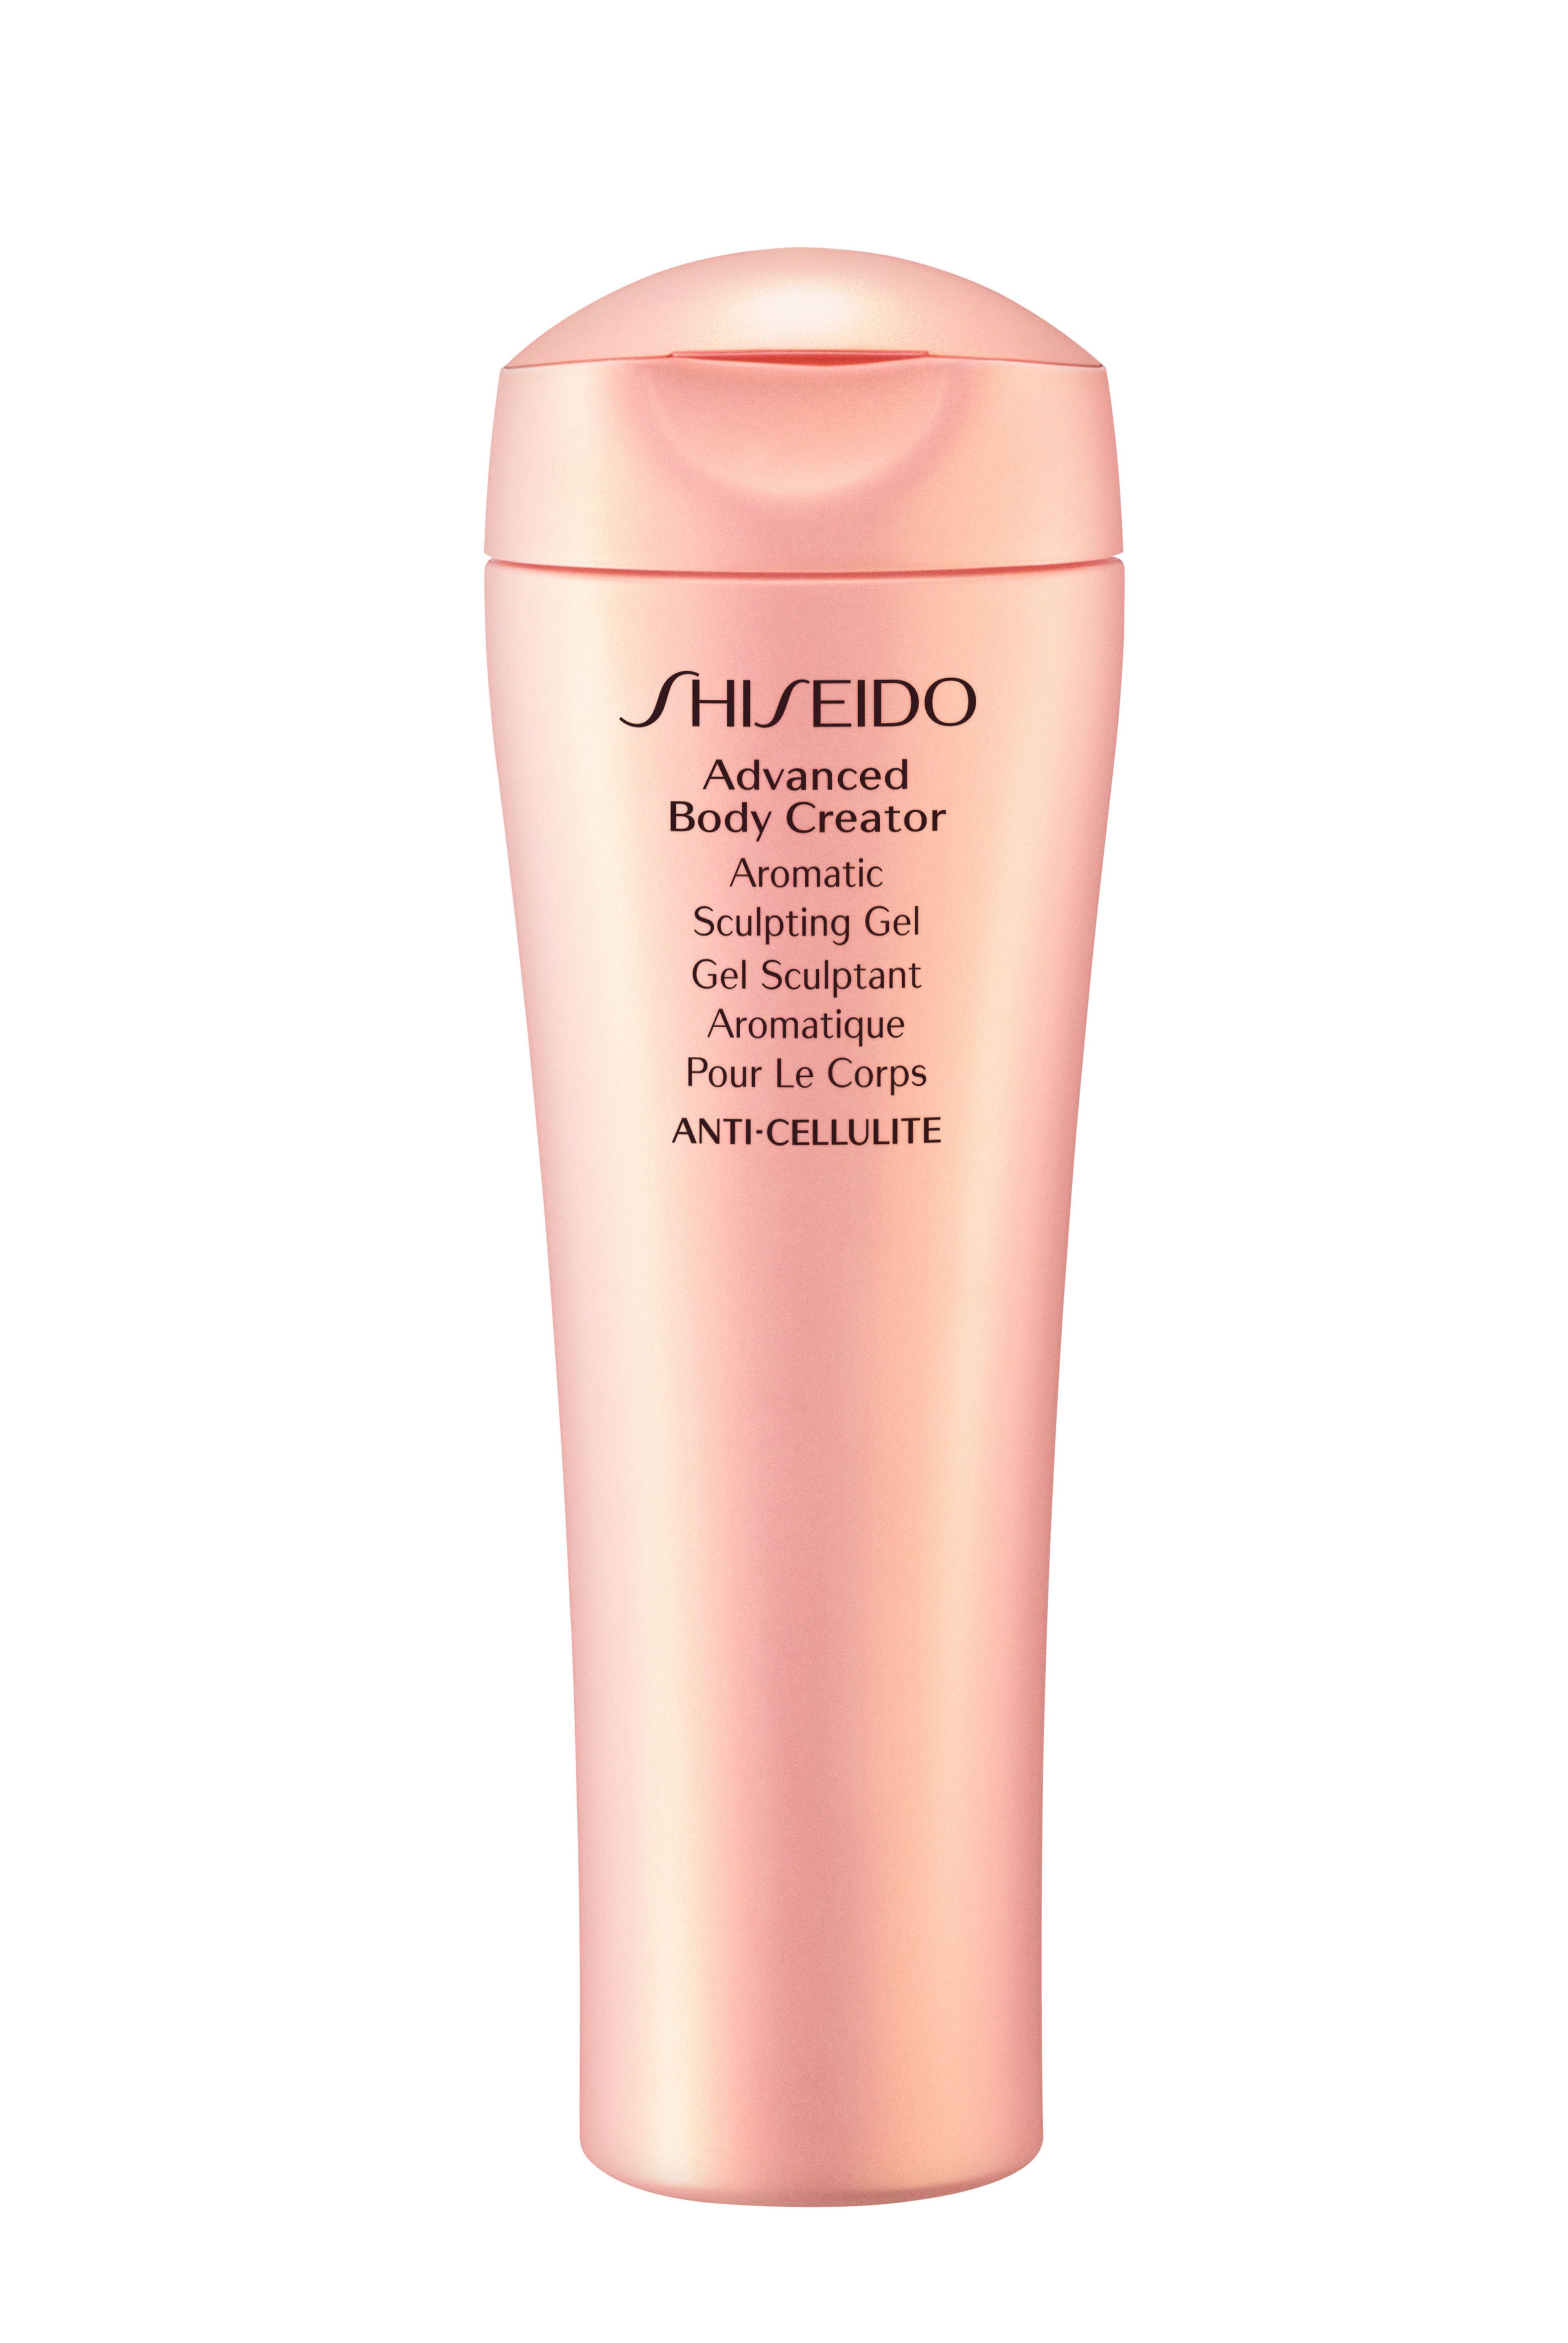 Shiseido Advanced Body Creator Aromatic Sculpting Gel 1